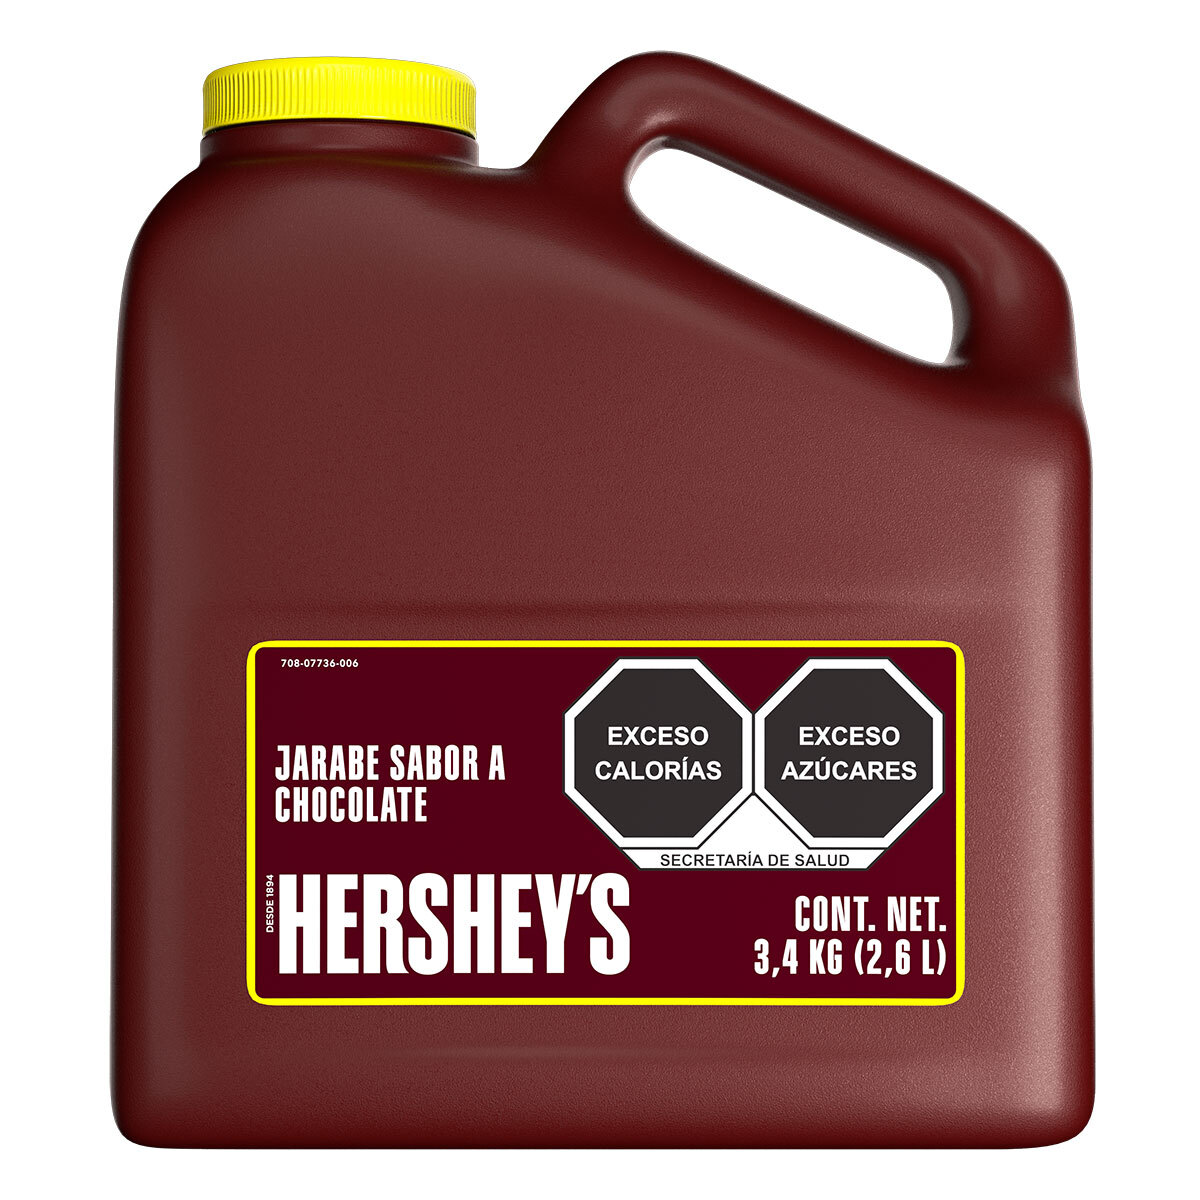 Hershey's Jarabe Sabor a Chocolate 2.6 L